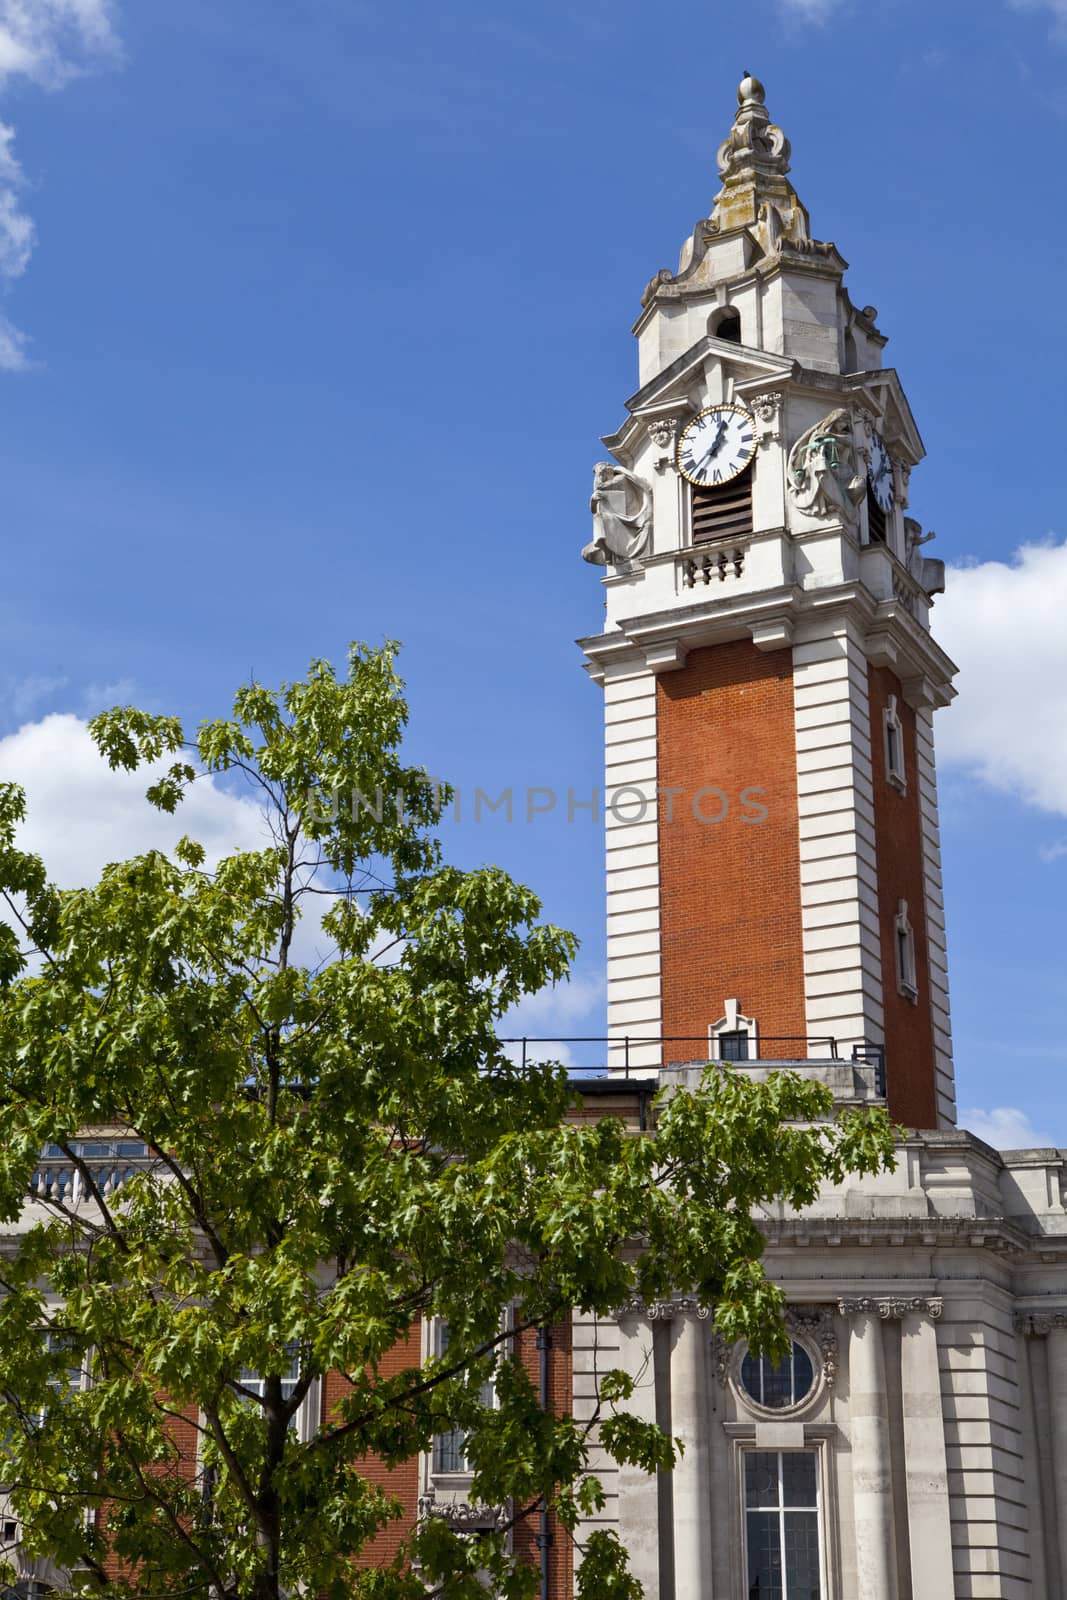 The impressive Lambeth Town Hall in Brixton, London.